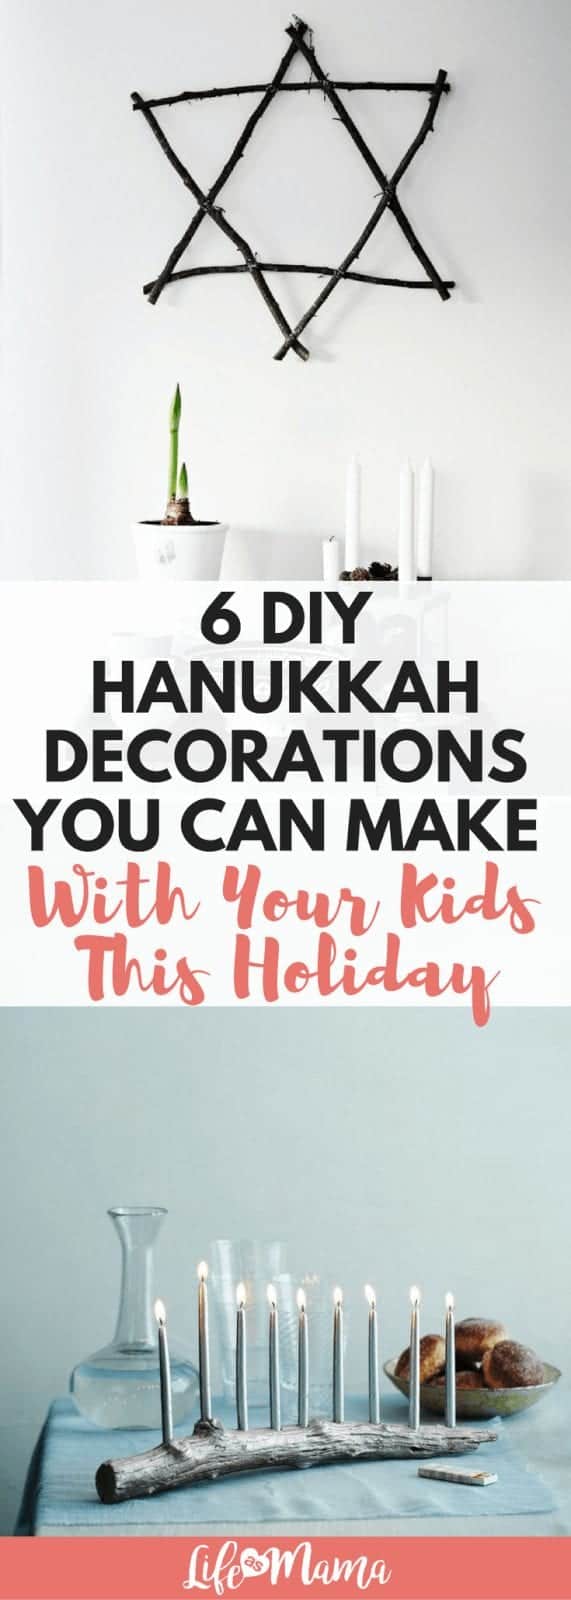 DIY Hanukkah decorations